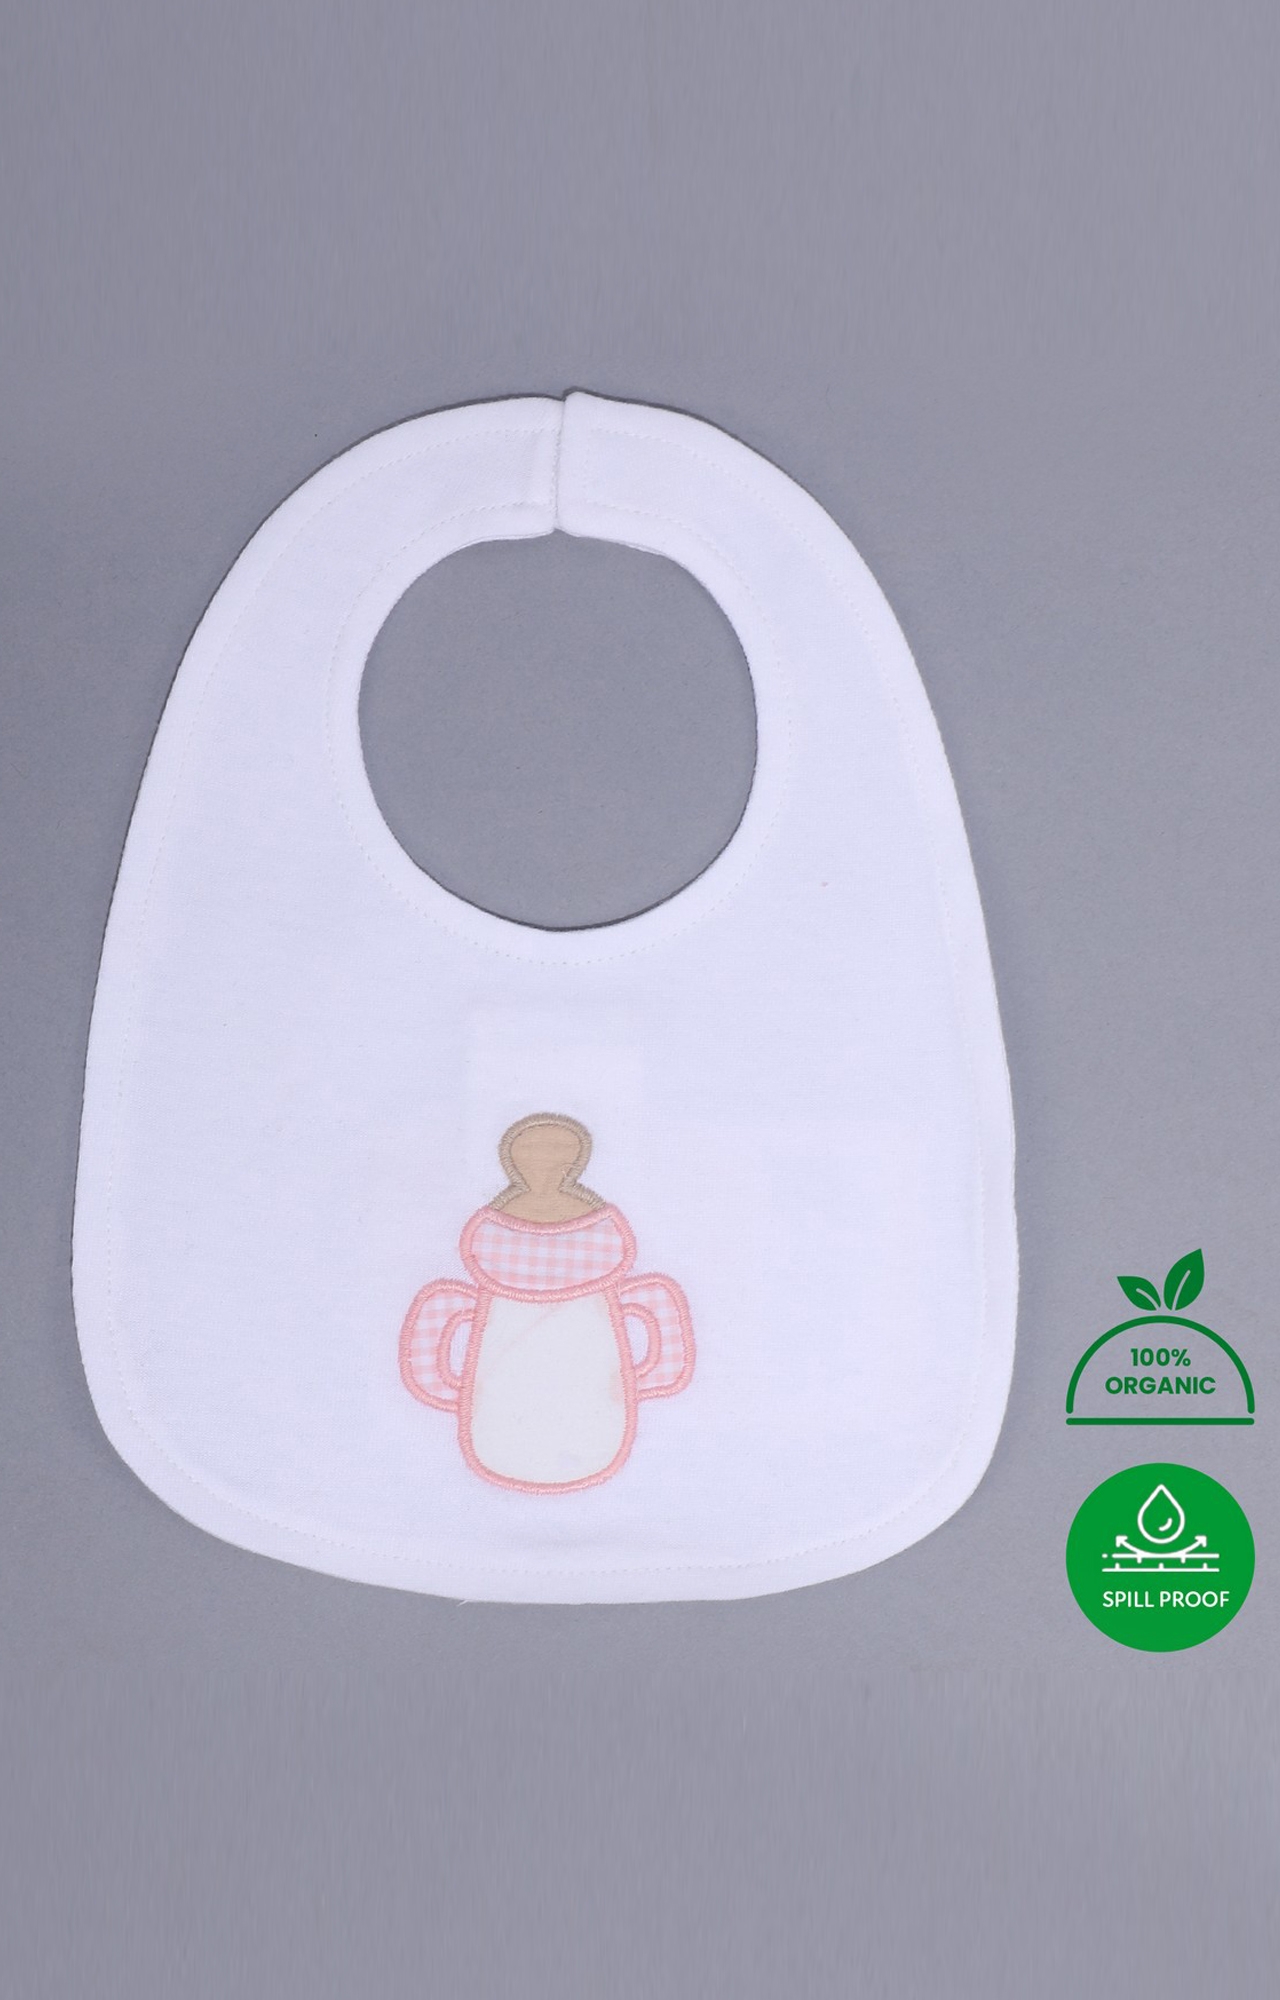 Kidbea | Printed Baby Feeding Bib With Spill-Proof Finish 3